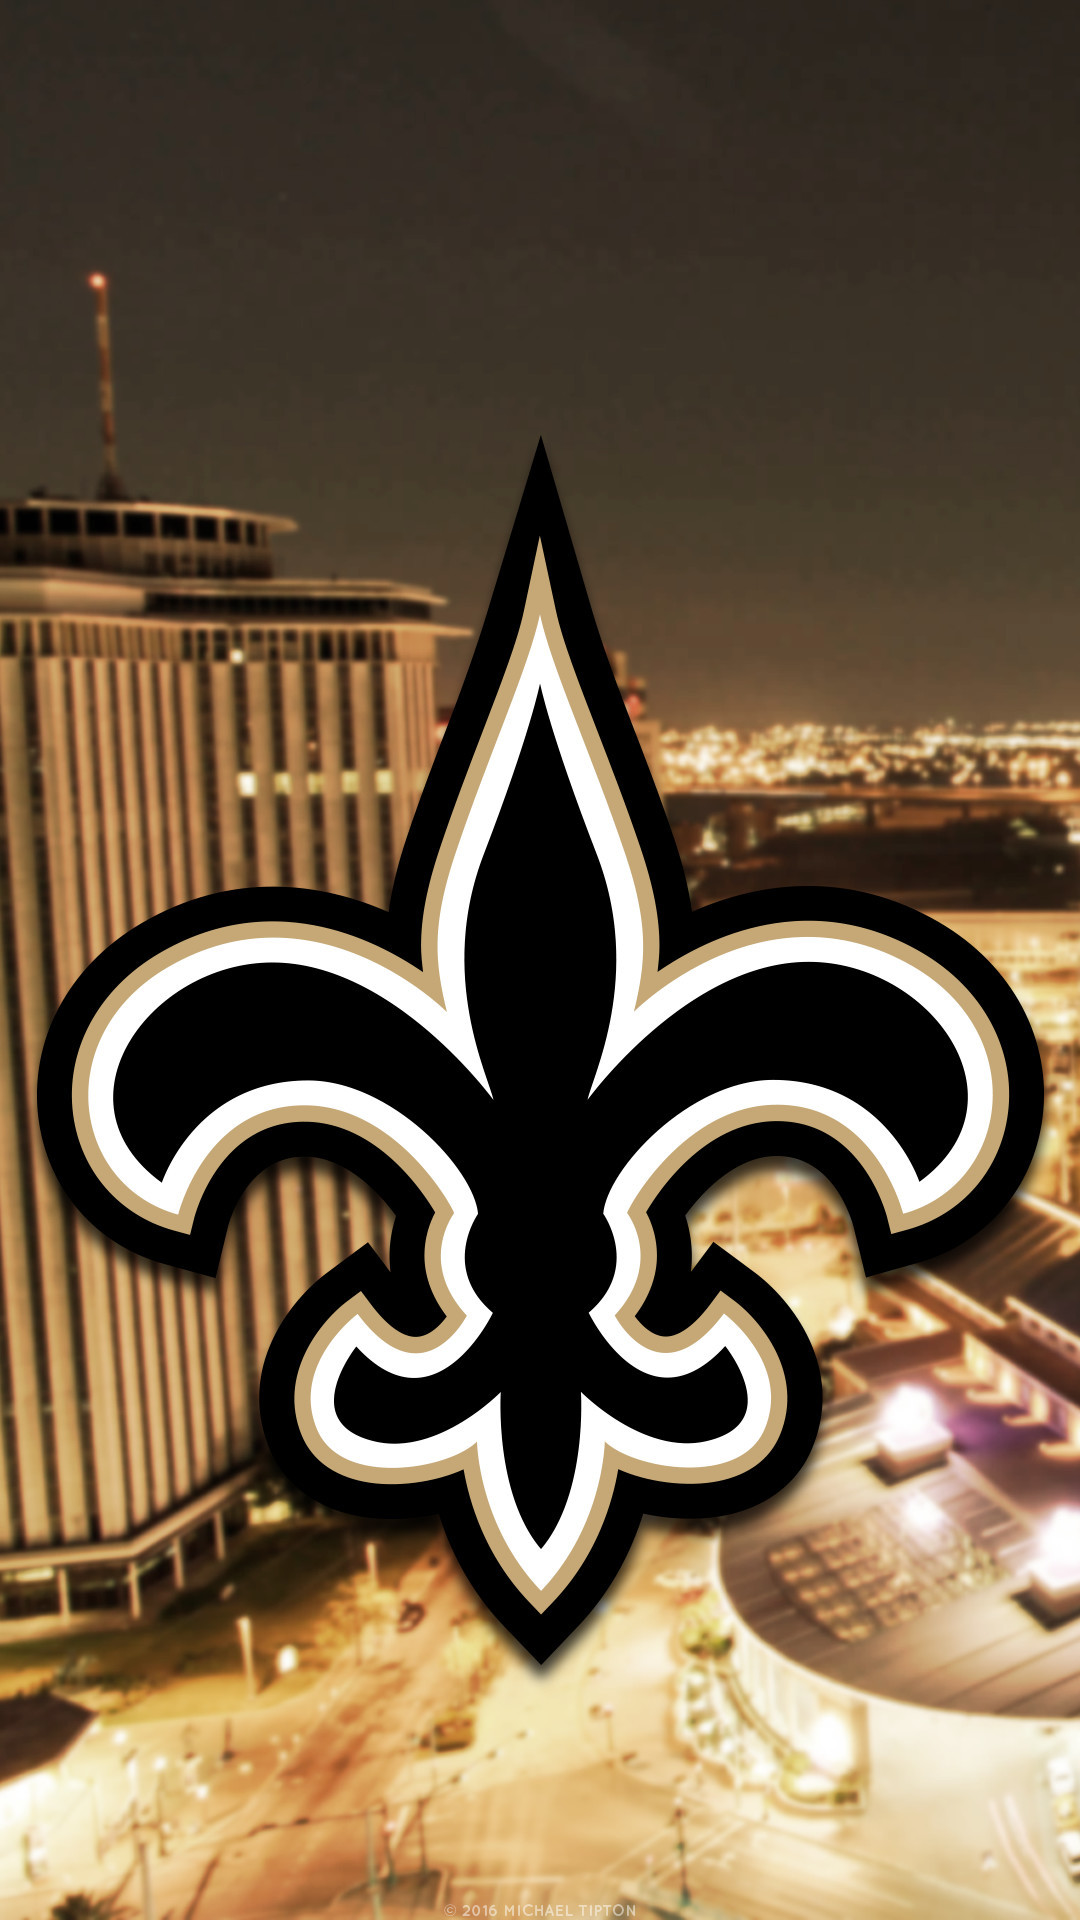 1080x1920 New Orleans Saints city 2017 logo wallpaper free iphone 5, 6,